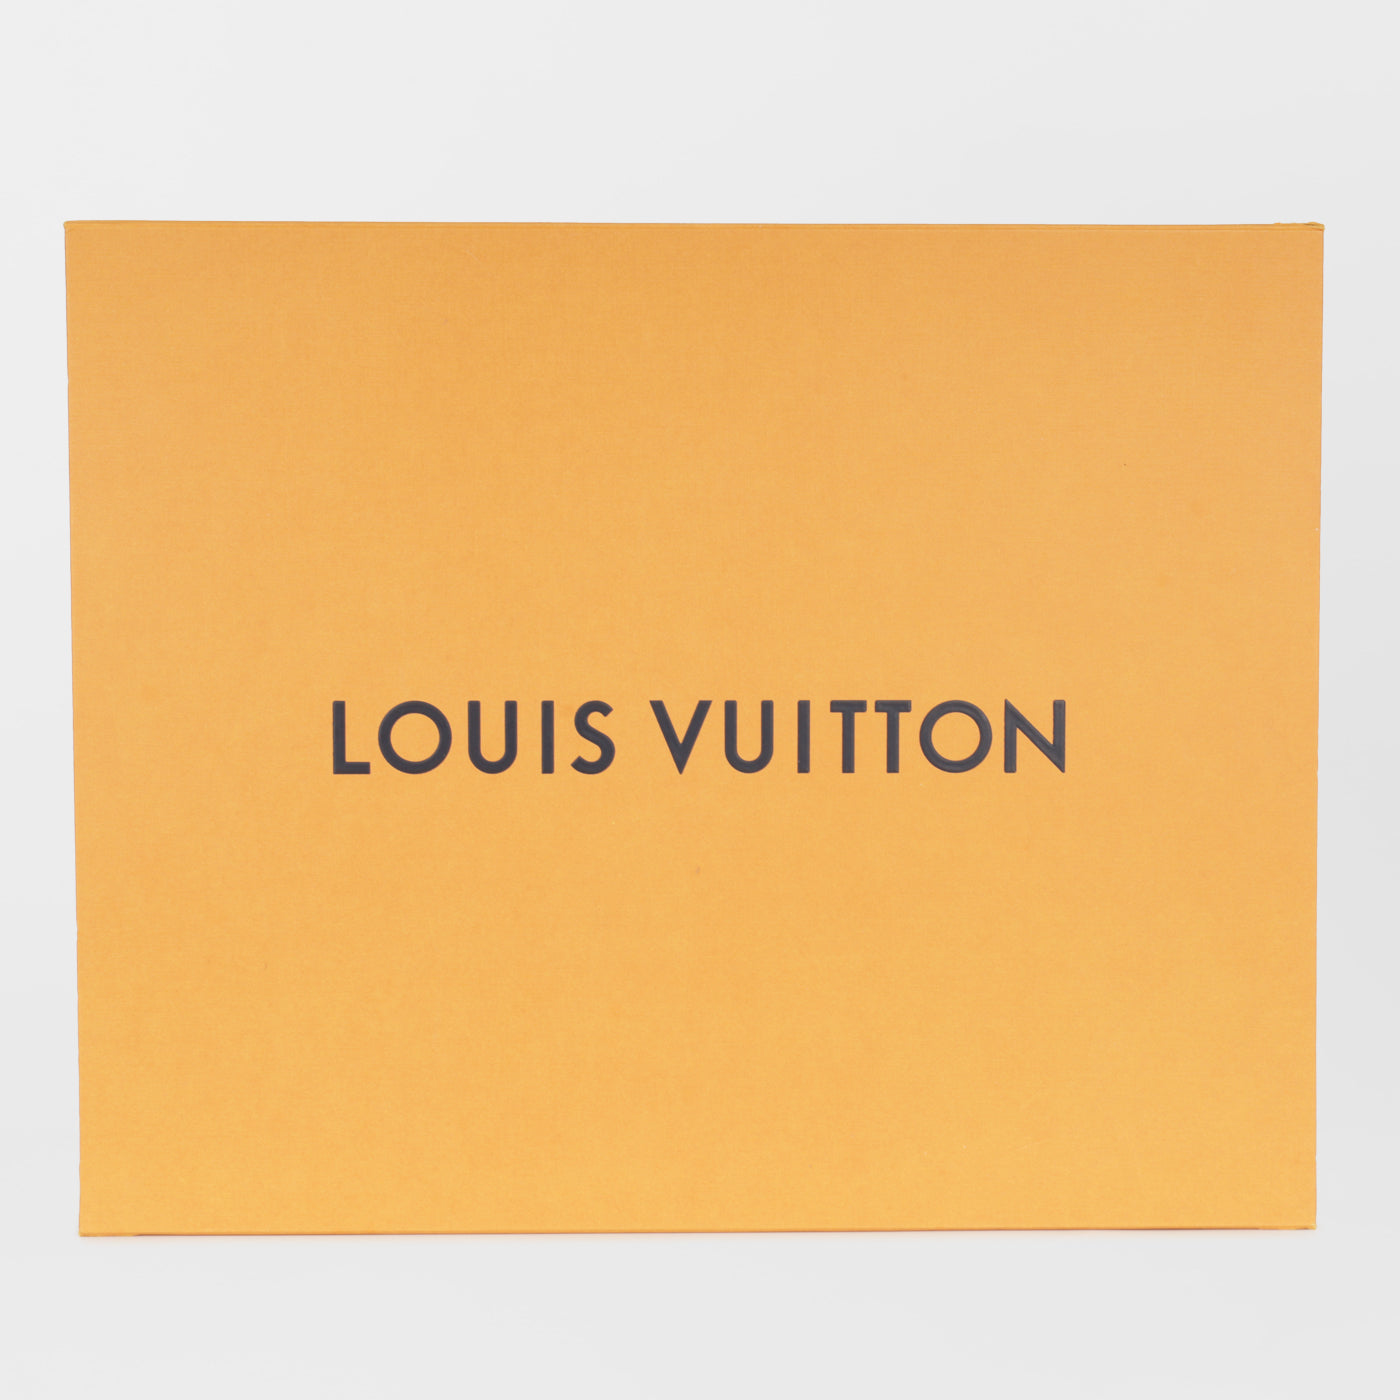 Replica Louis Vuitton N41473 Josh Backpack Damier Graphite Canvas For Sale